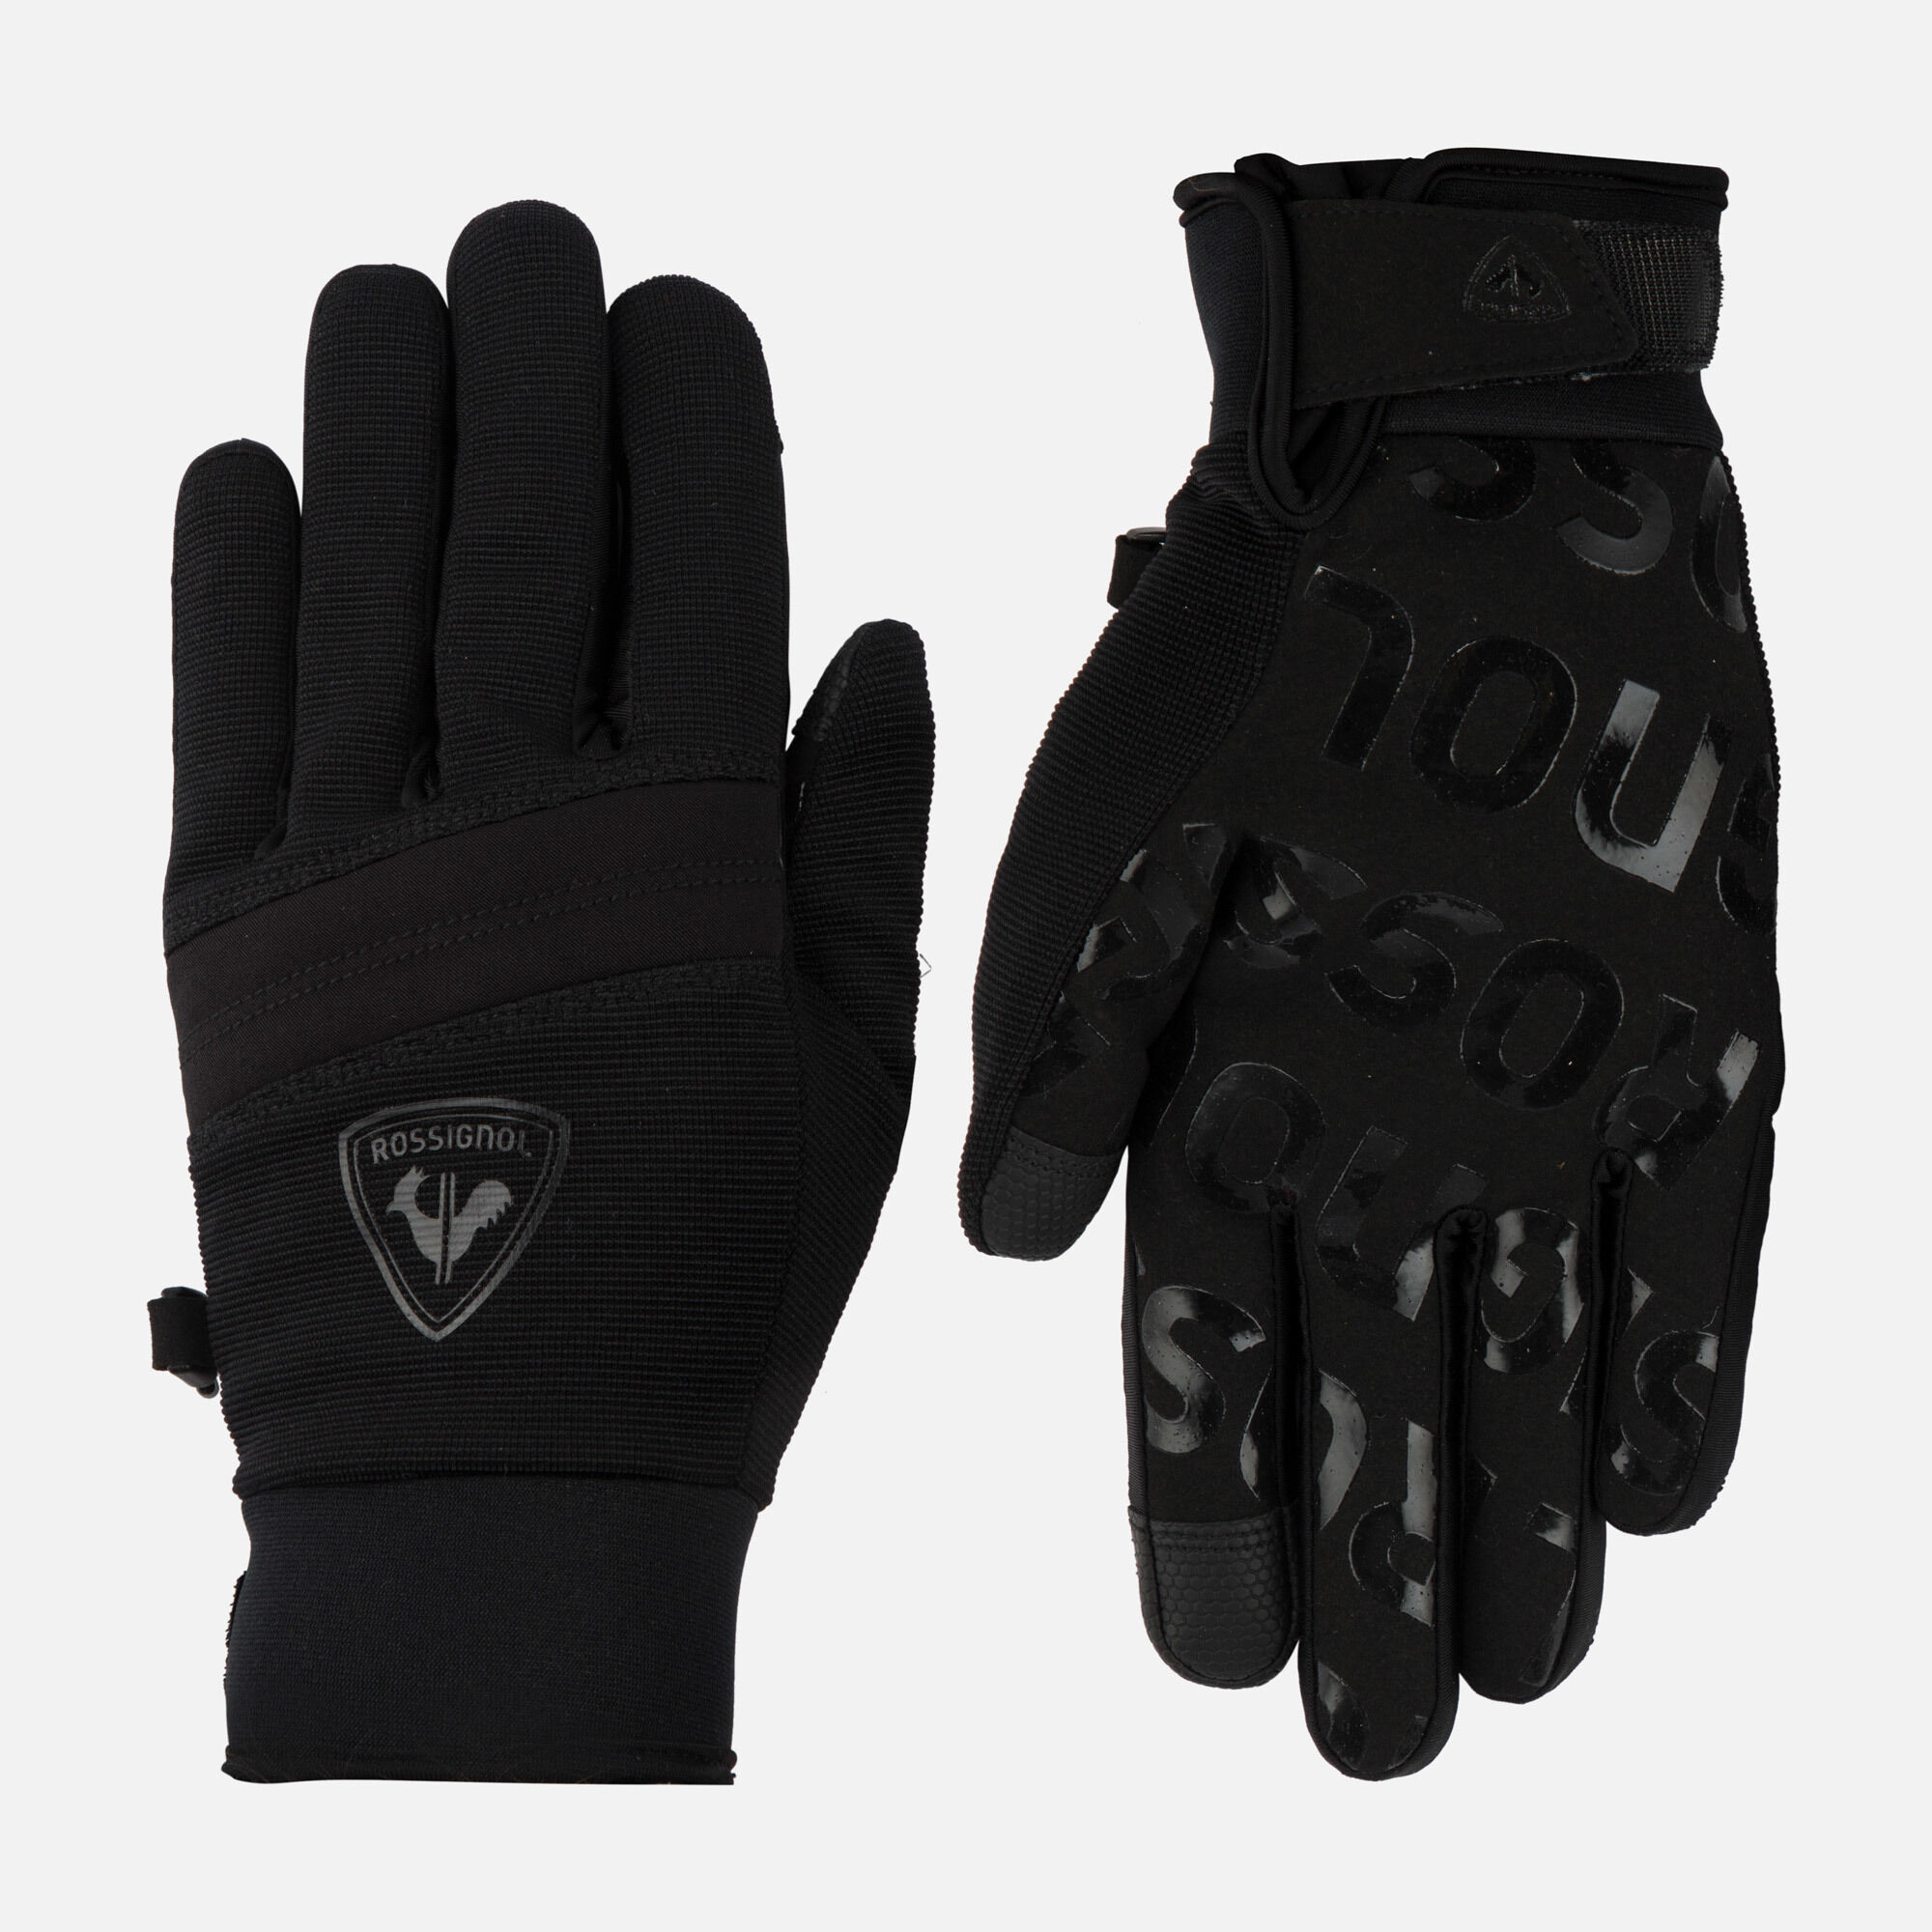 Rossignol Women's Elite Leather IMPR Gloves | Gloves Women | Black 